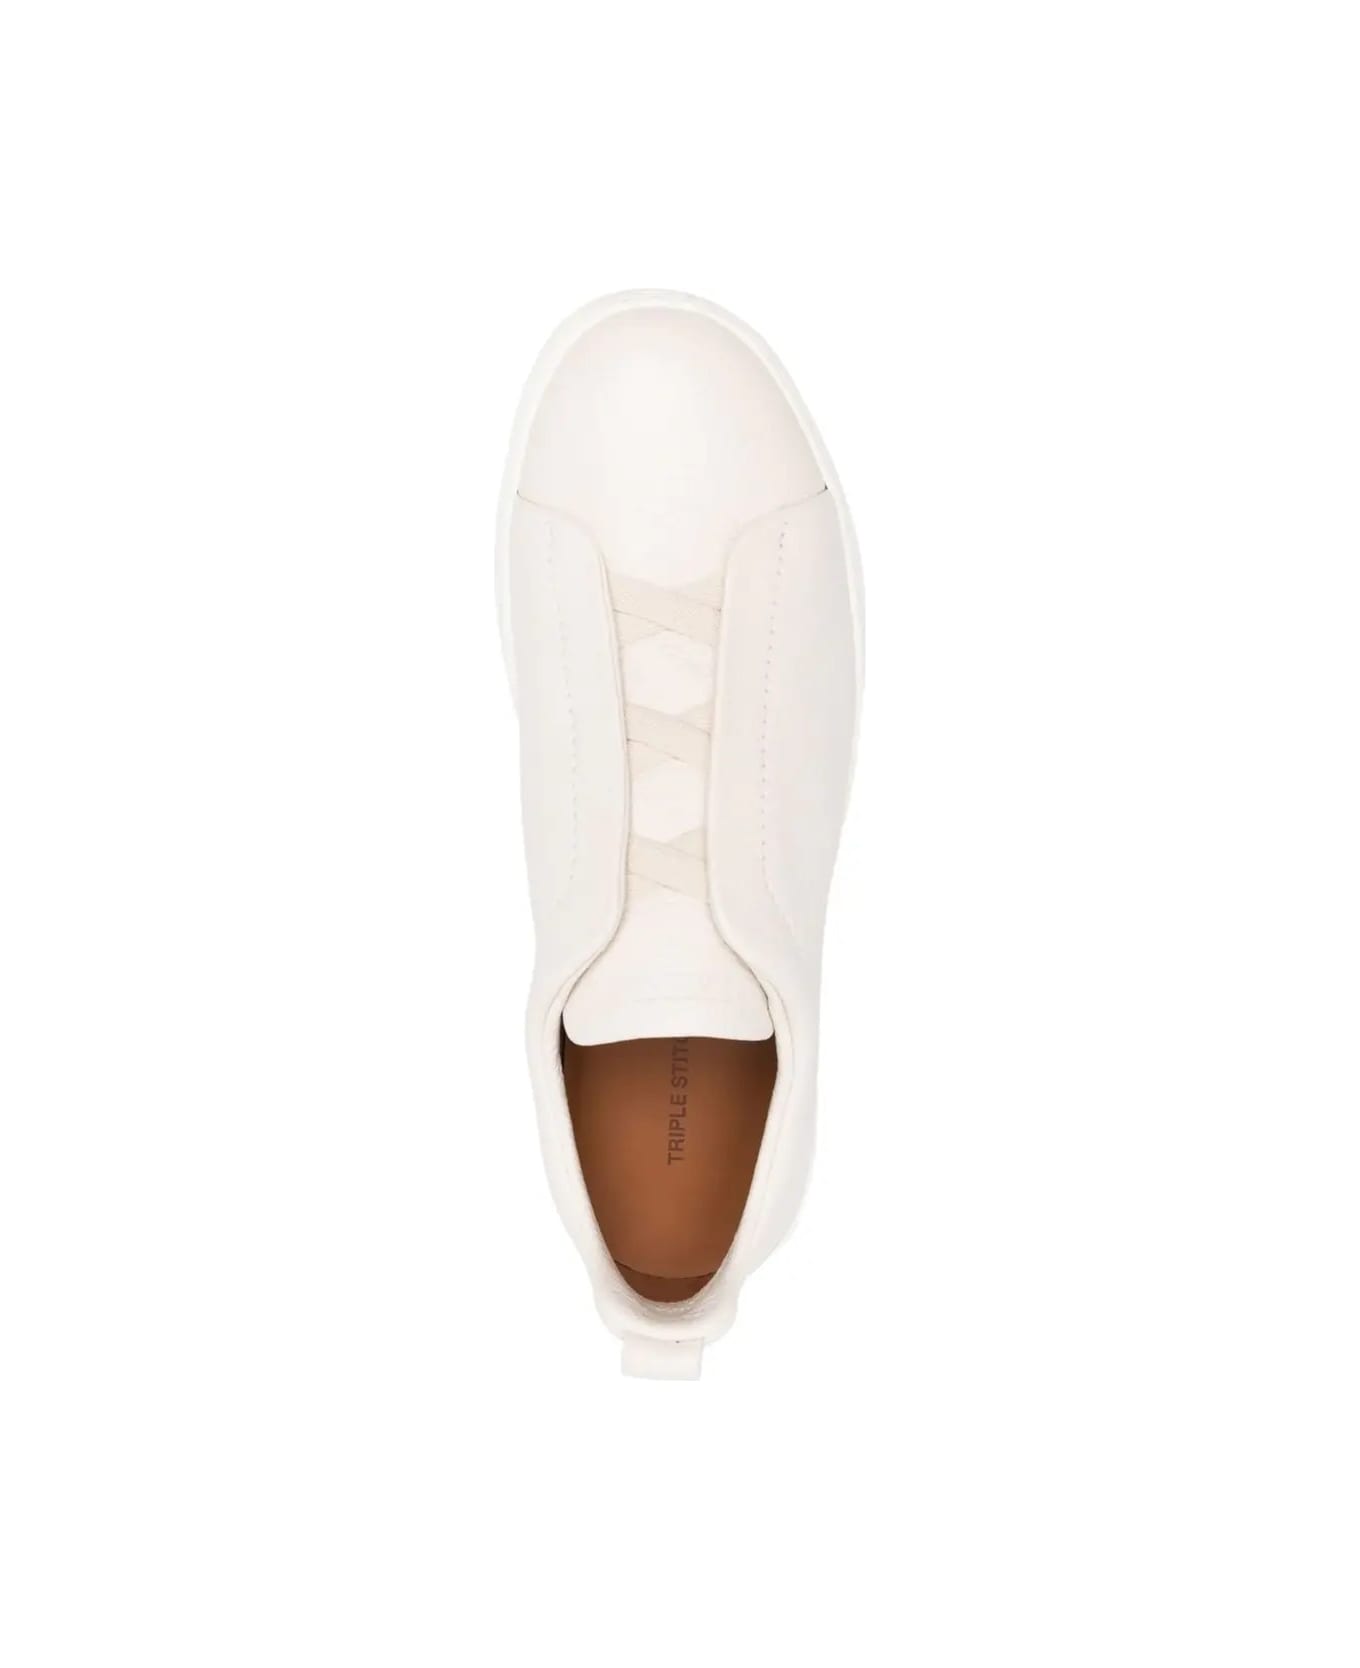 Zegna Triple Stitch Sneakers In White Leather - White